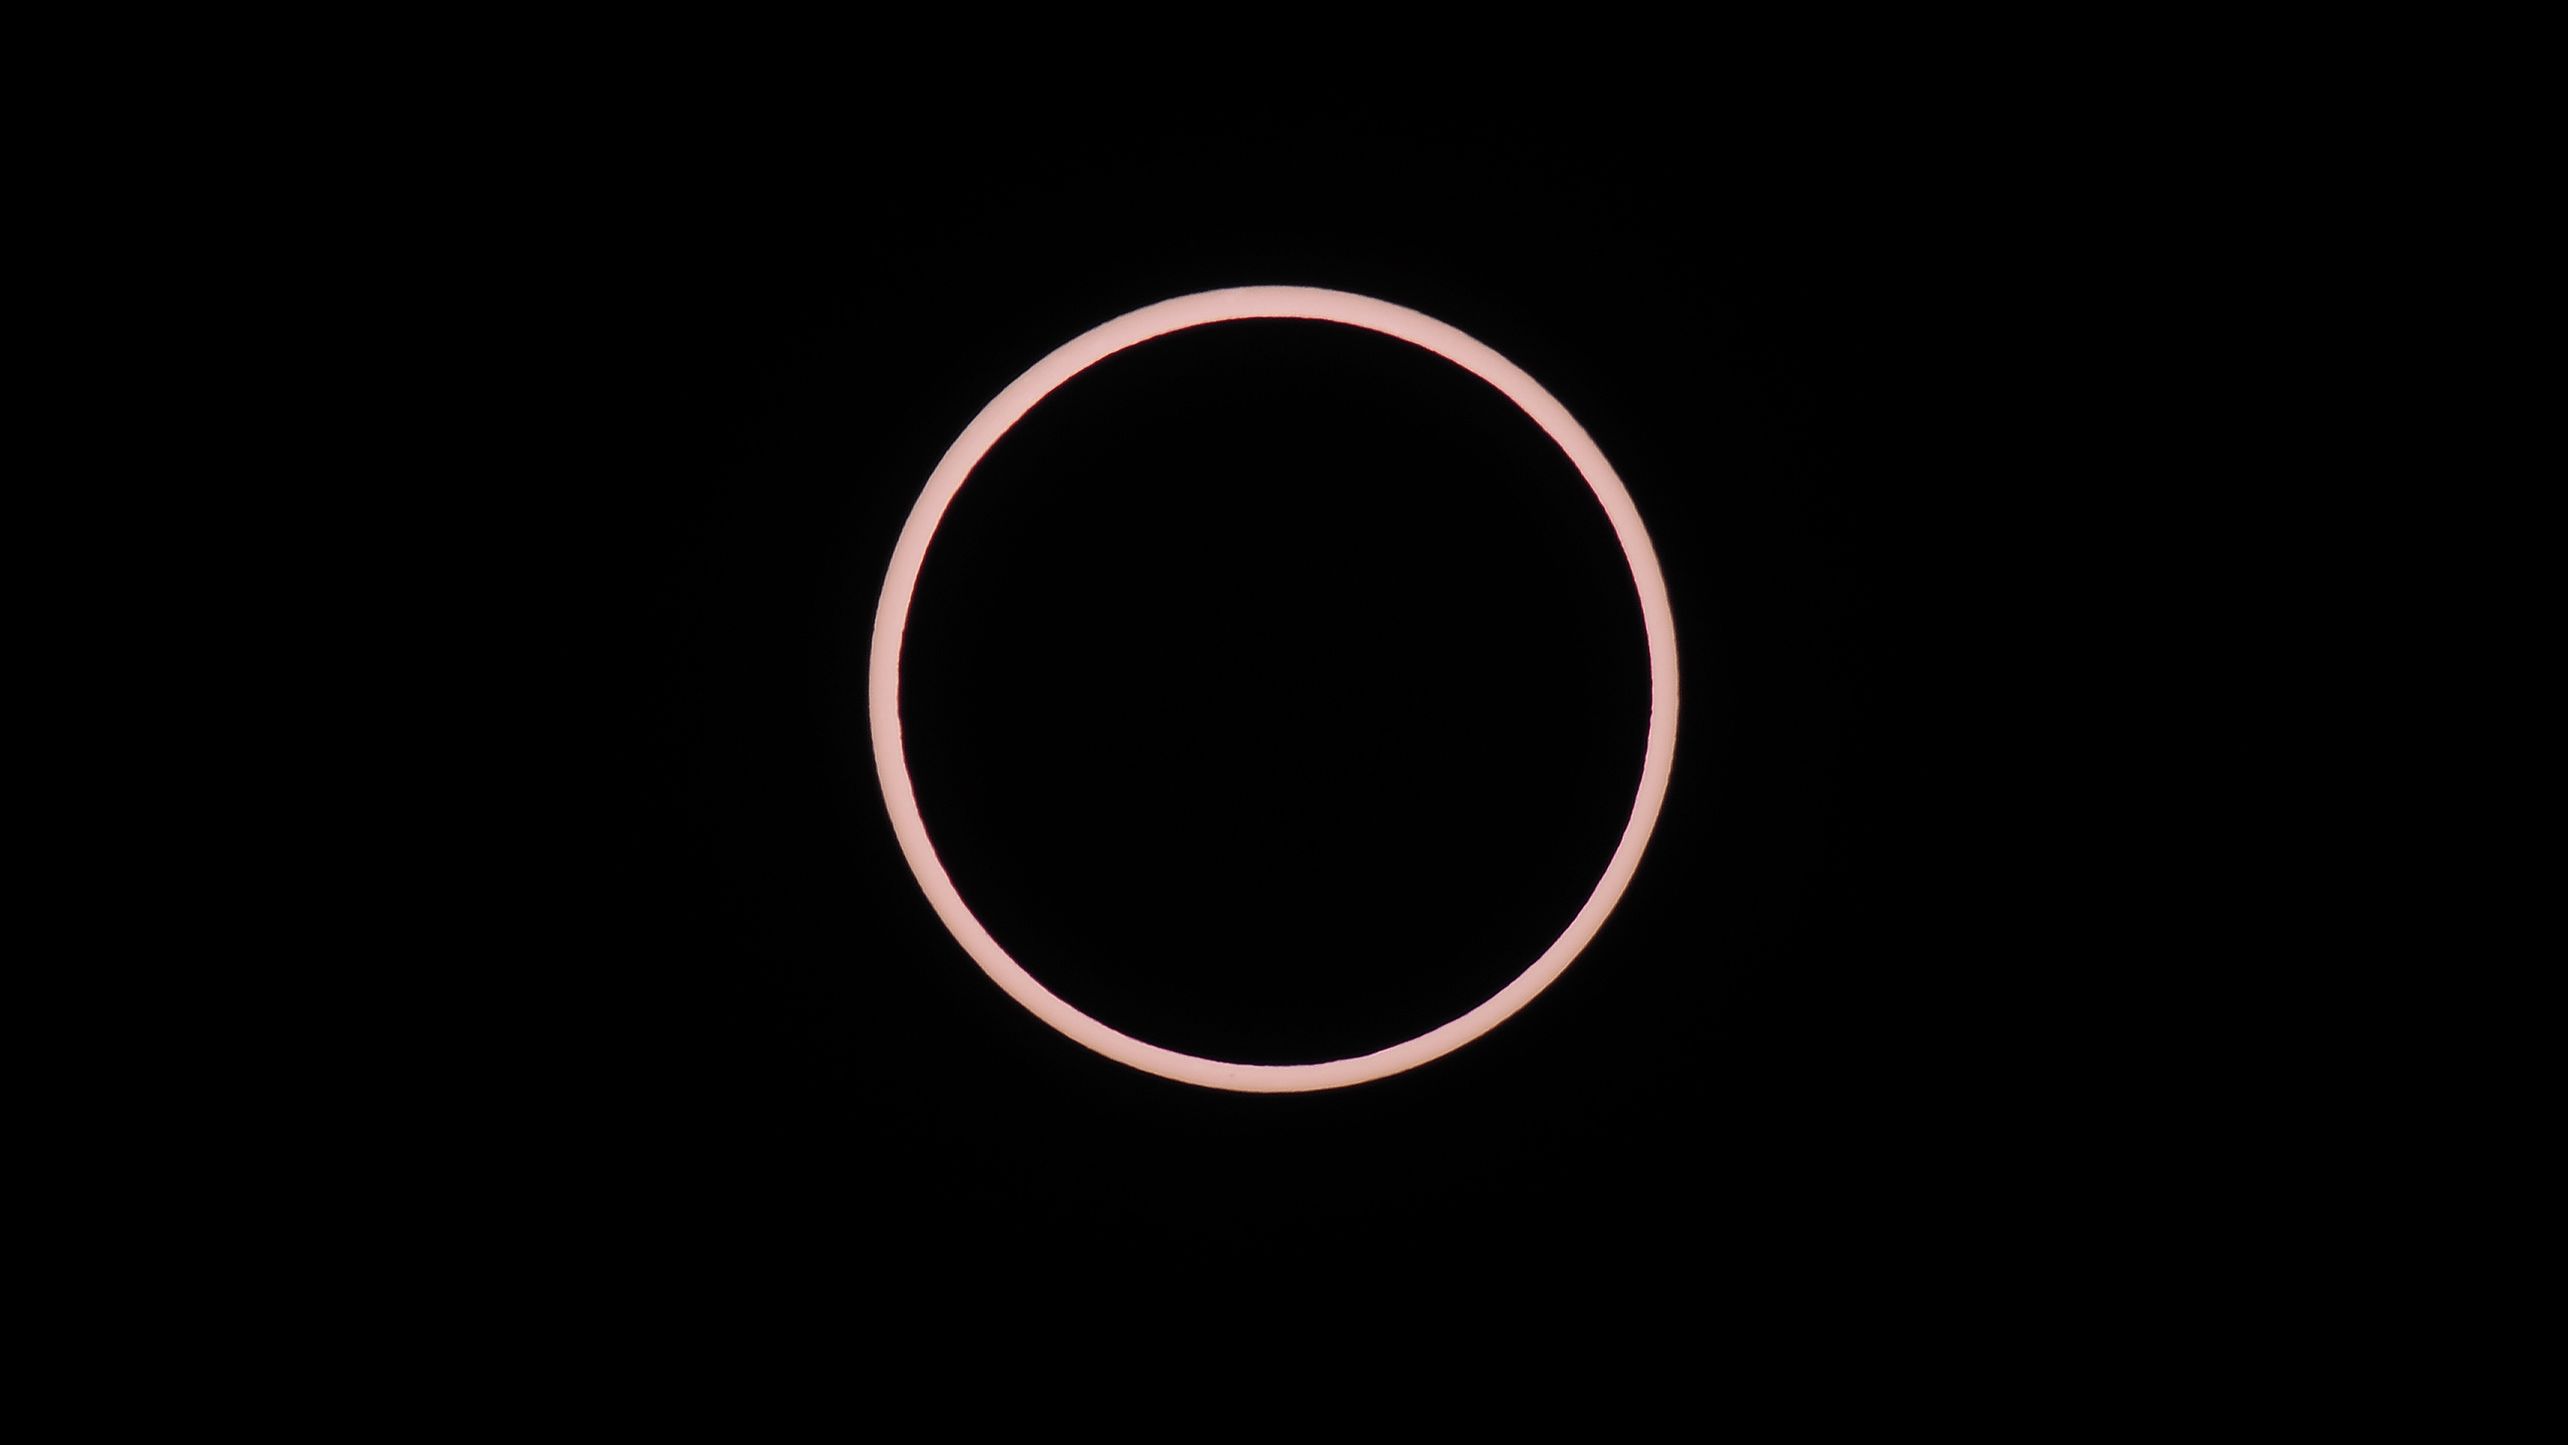 annular eclipse 05 FILE 0901